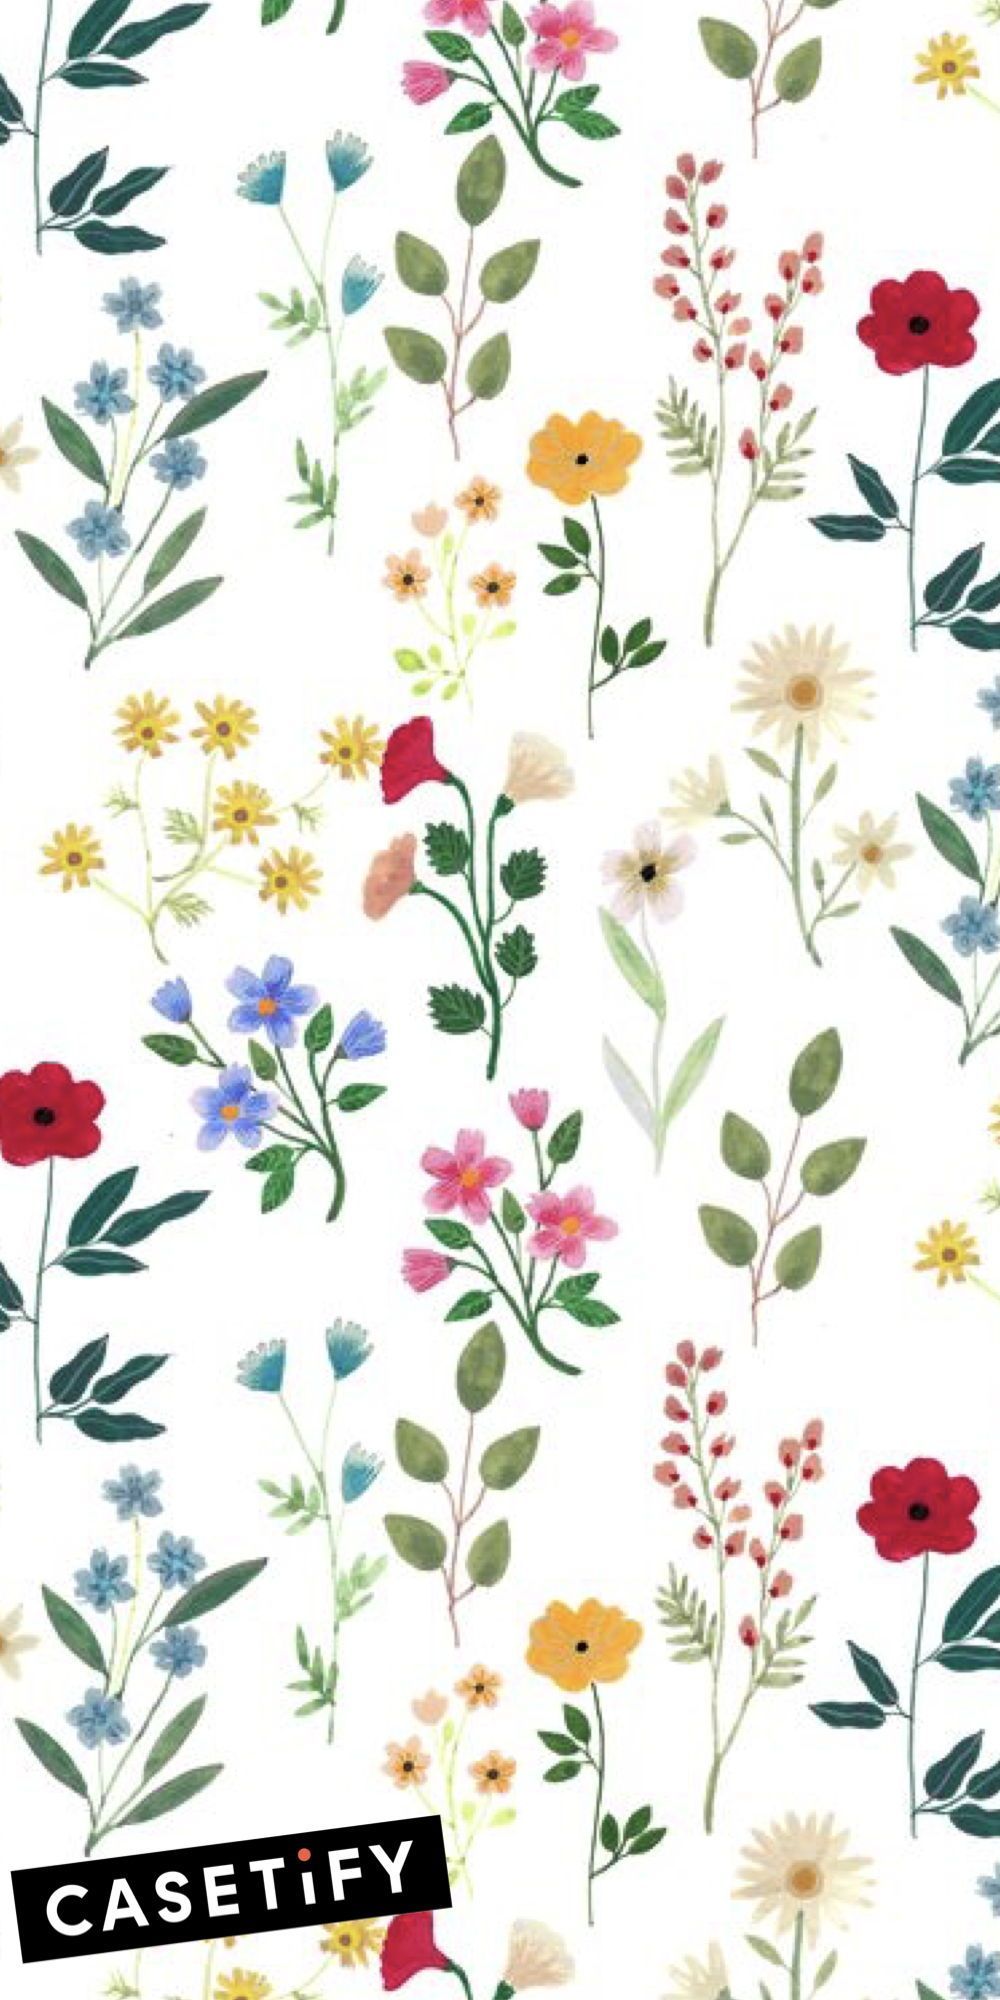 casetify #iPhone #Case #Cases #Art #Design #Pattern #Animals #Floral # Flowers #Cool #Wallpaper #Be. Watercolor flowers paintings, Pop art design, Cartoon flowers